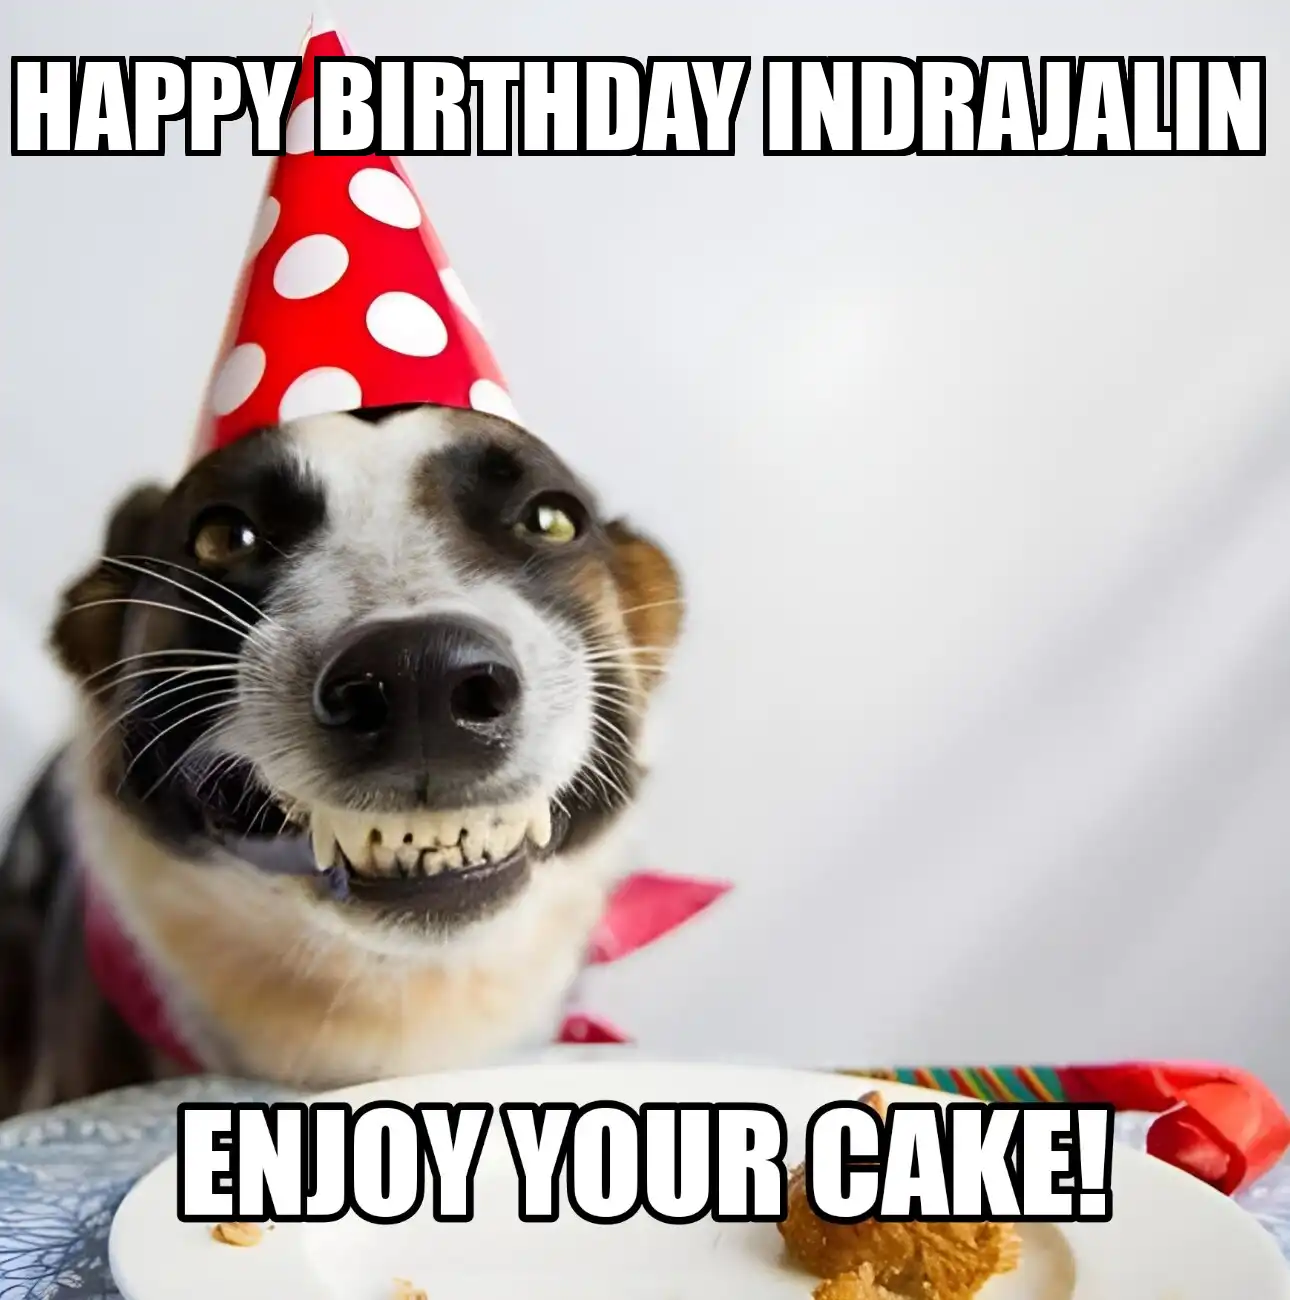 Happy Birthday Indrajalin Enjoy Your Cake Dog Meme